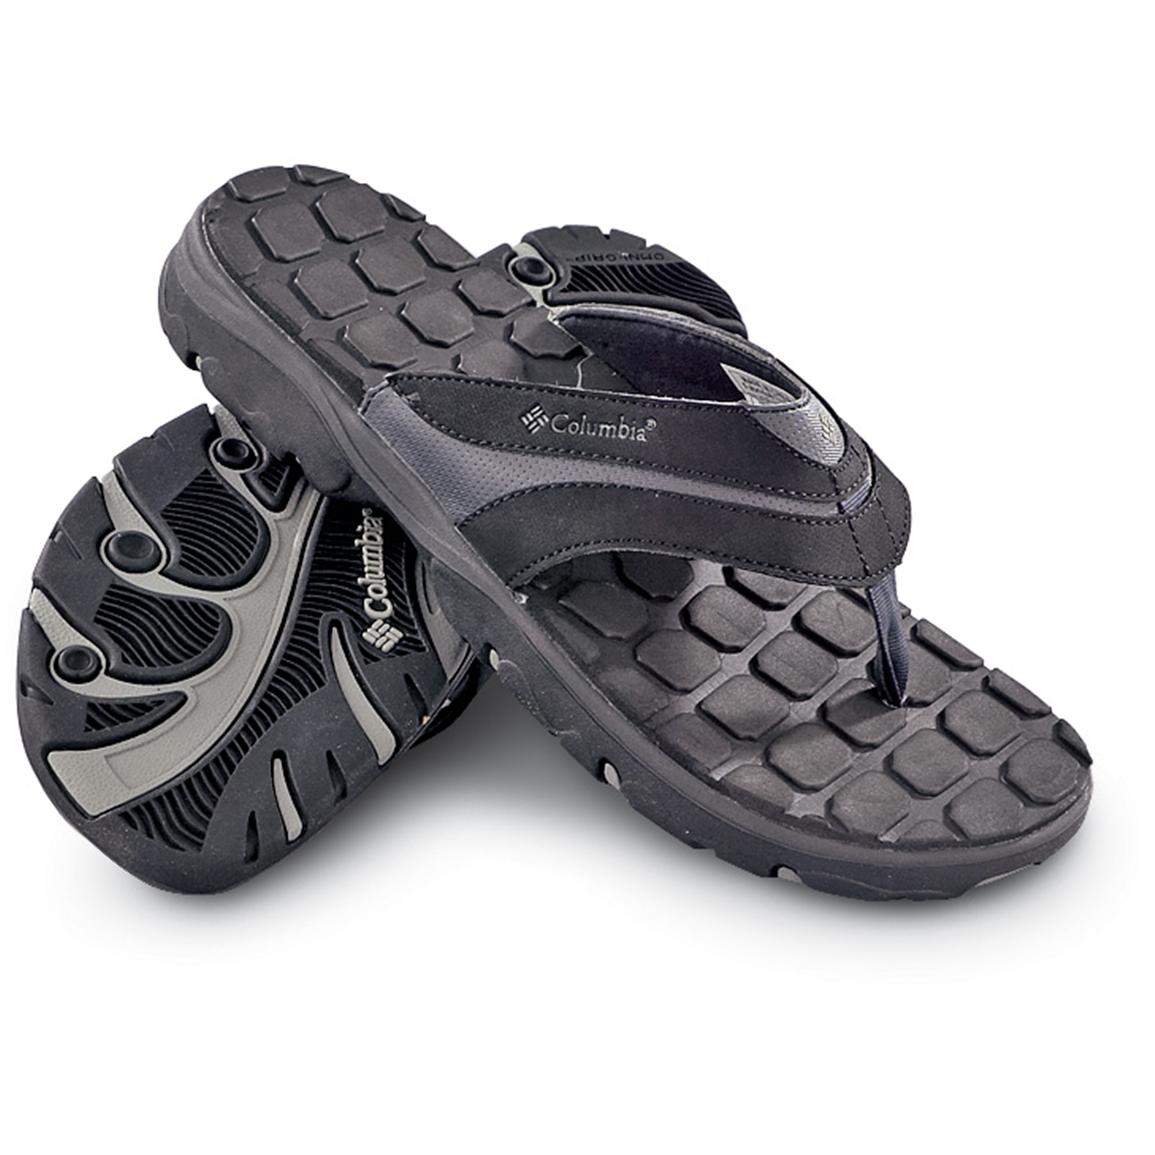  Men s  Columbia  Silver Sands Thong Sandals  Black 46187 Sandals  at Sportsman s  Guide